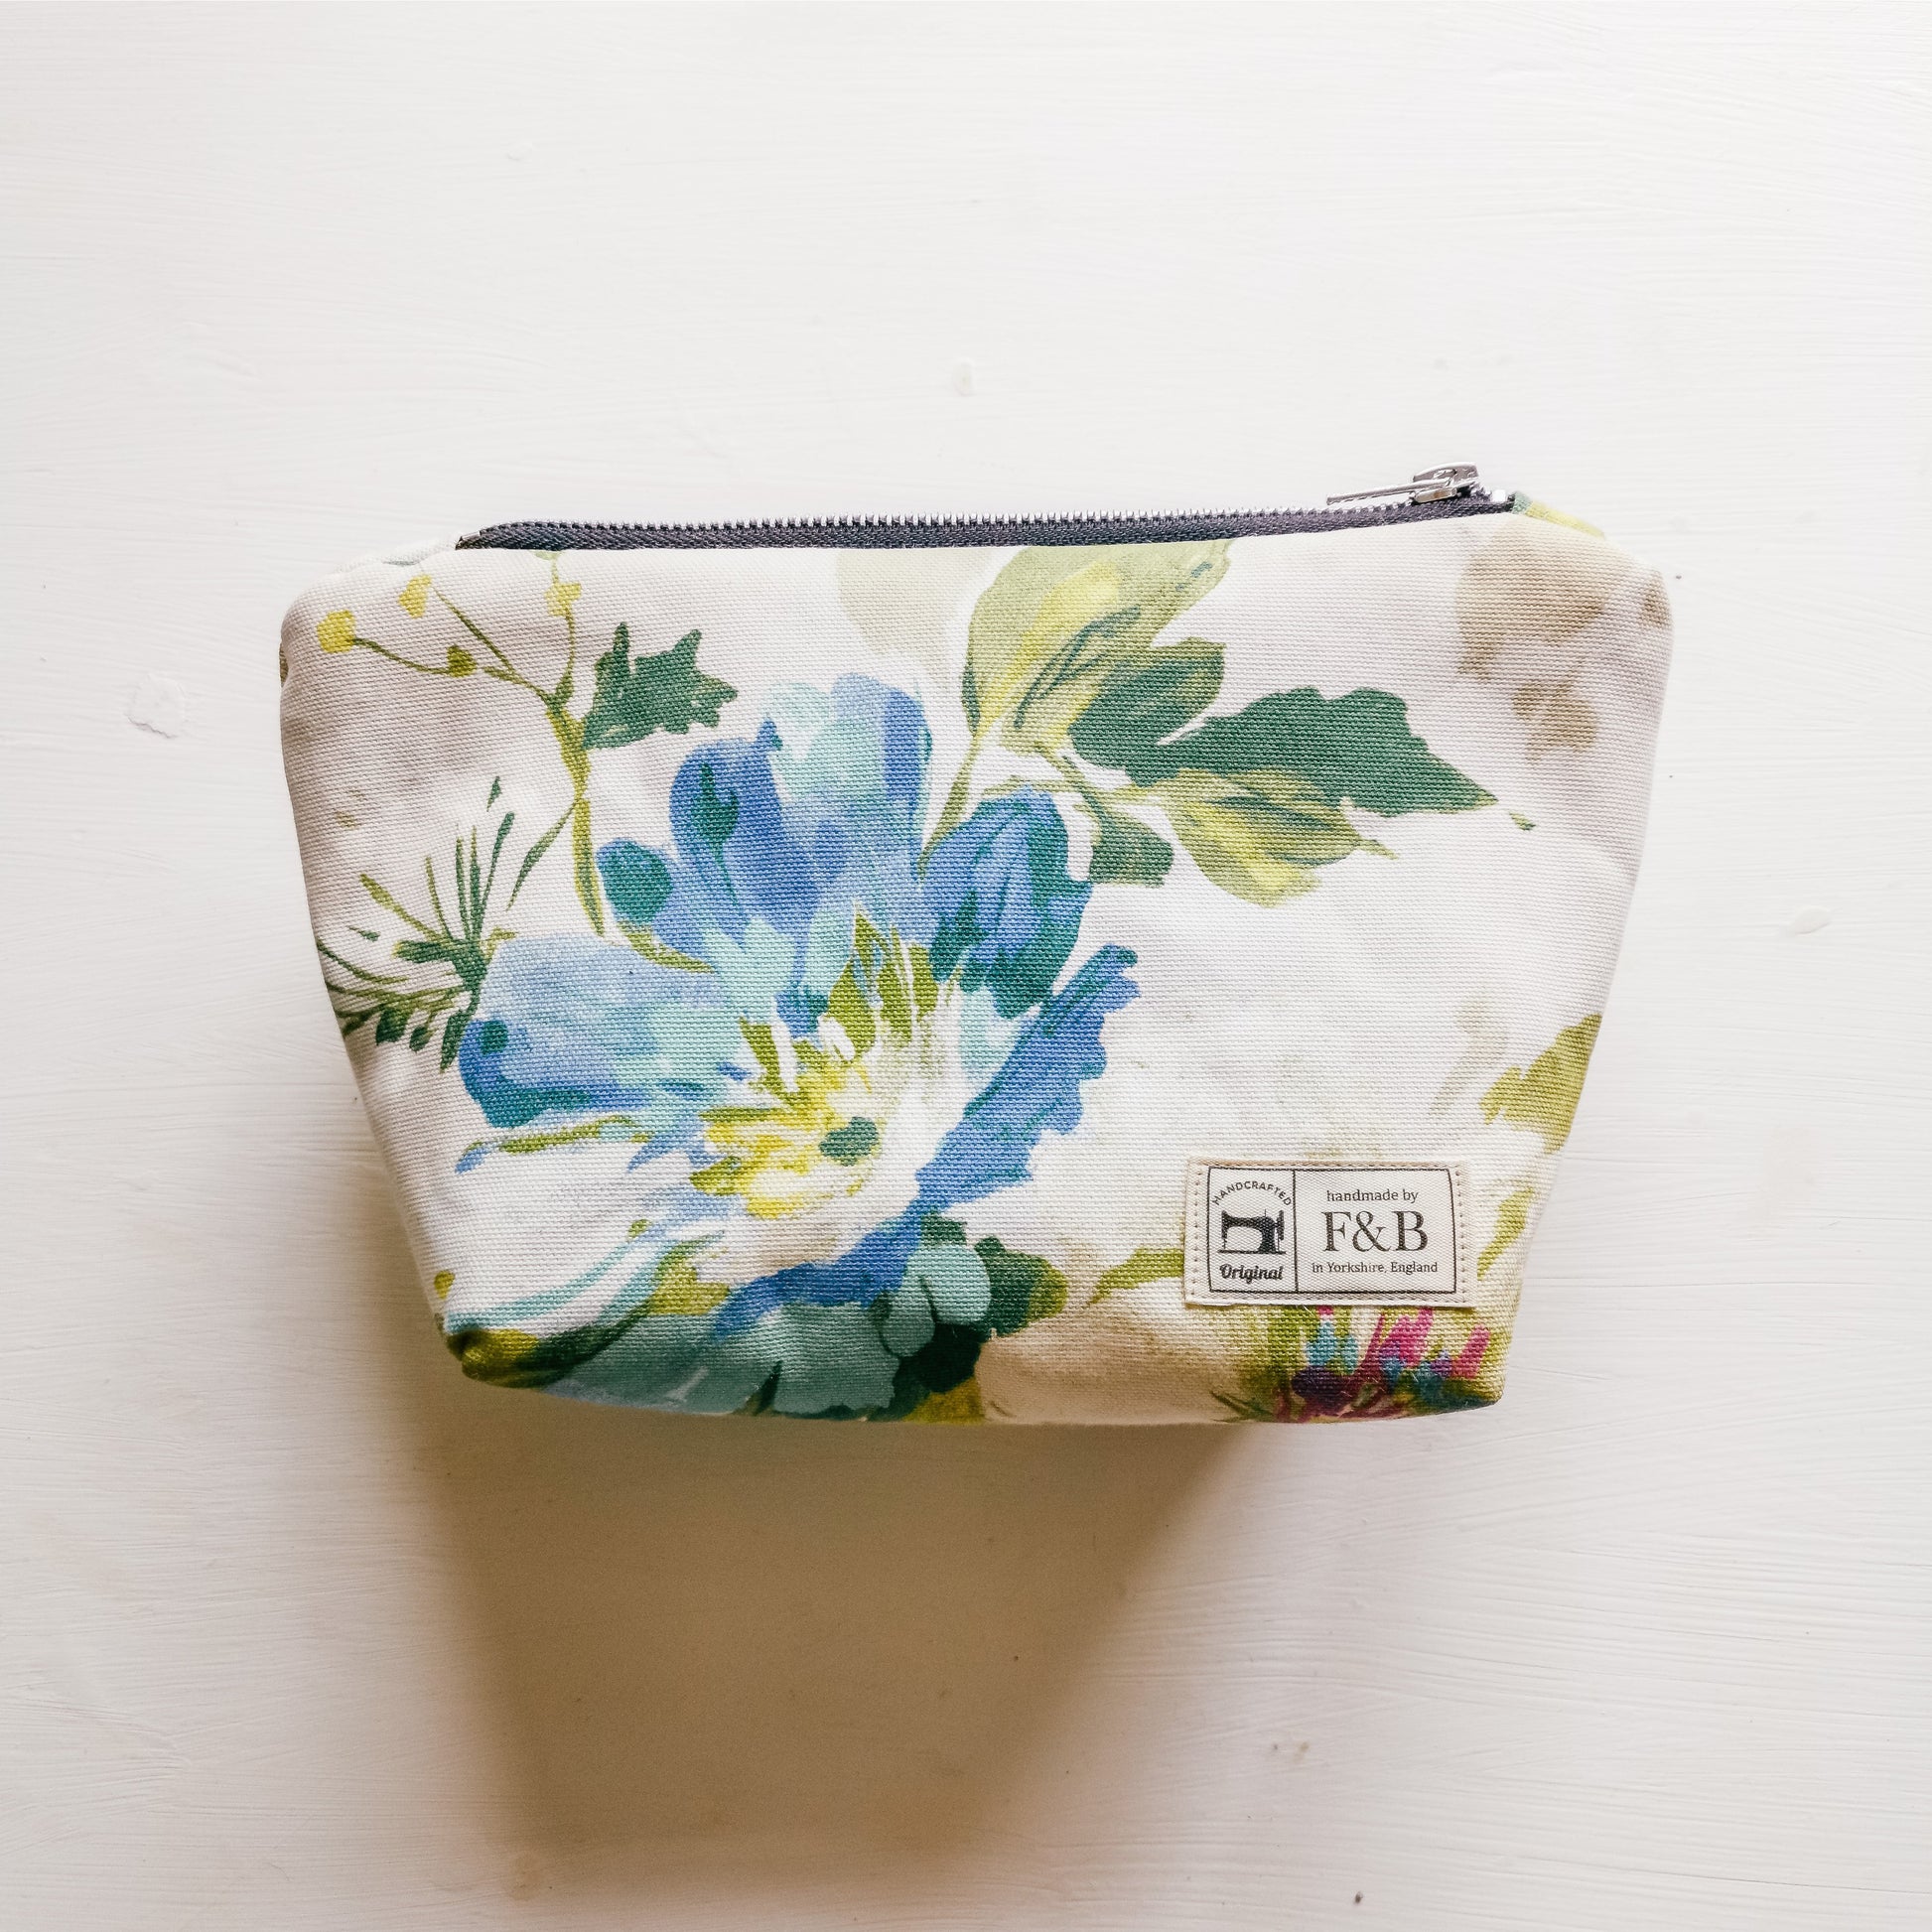 Handmade Floral Wash Bag or Make Up Bag from F&B